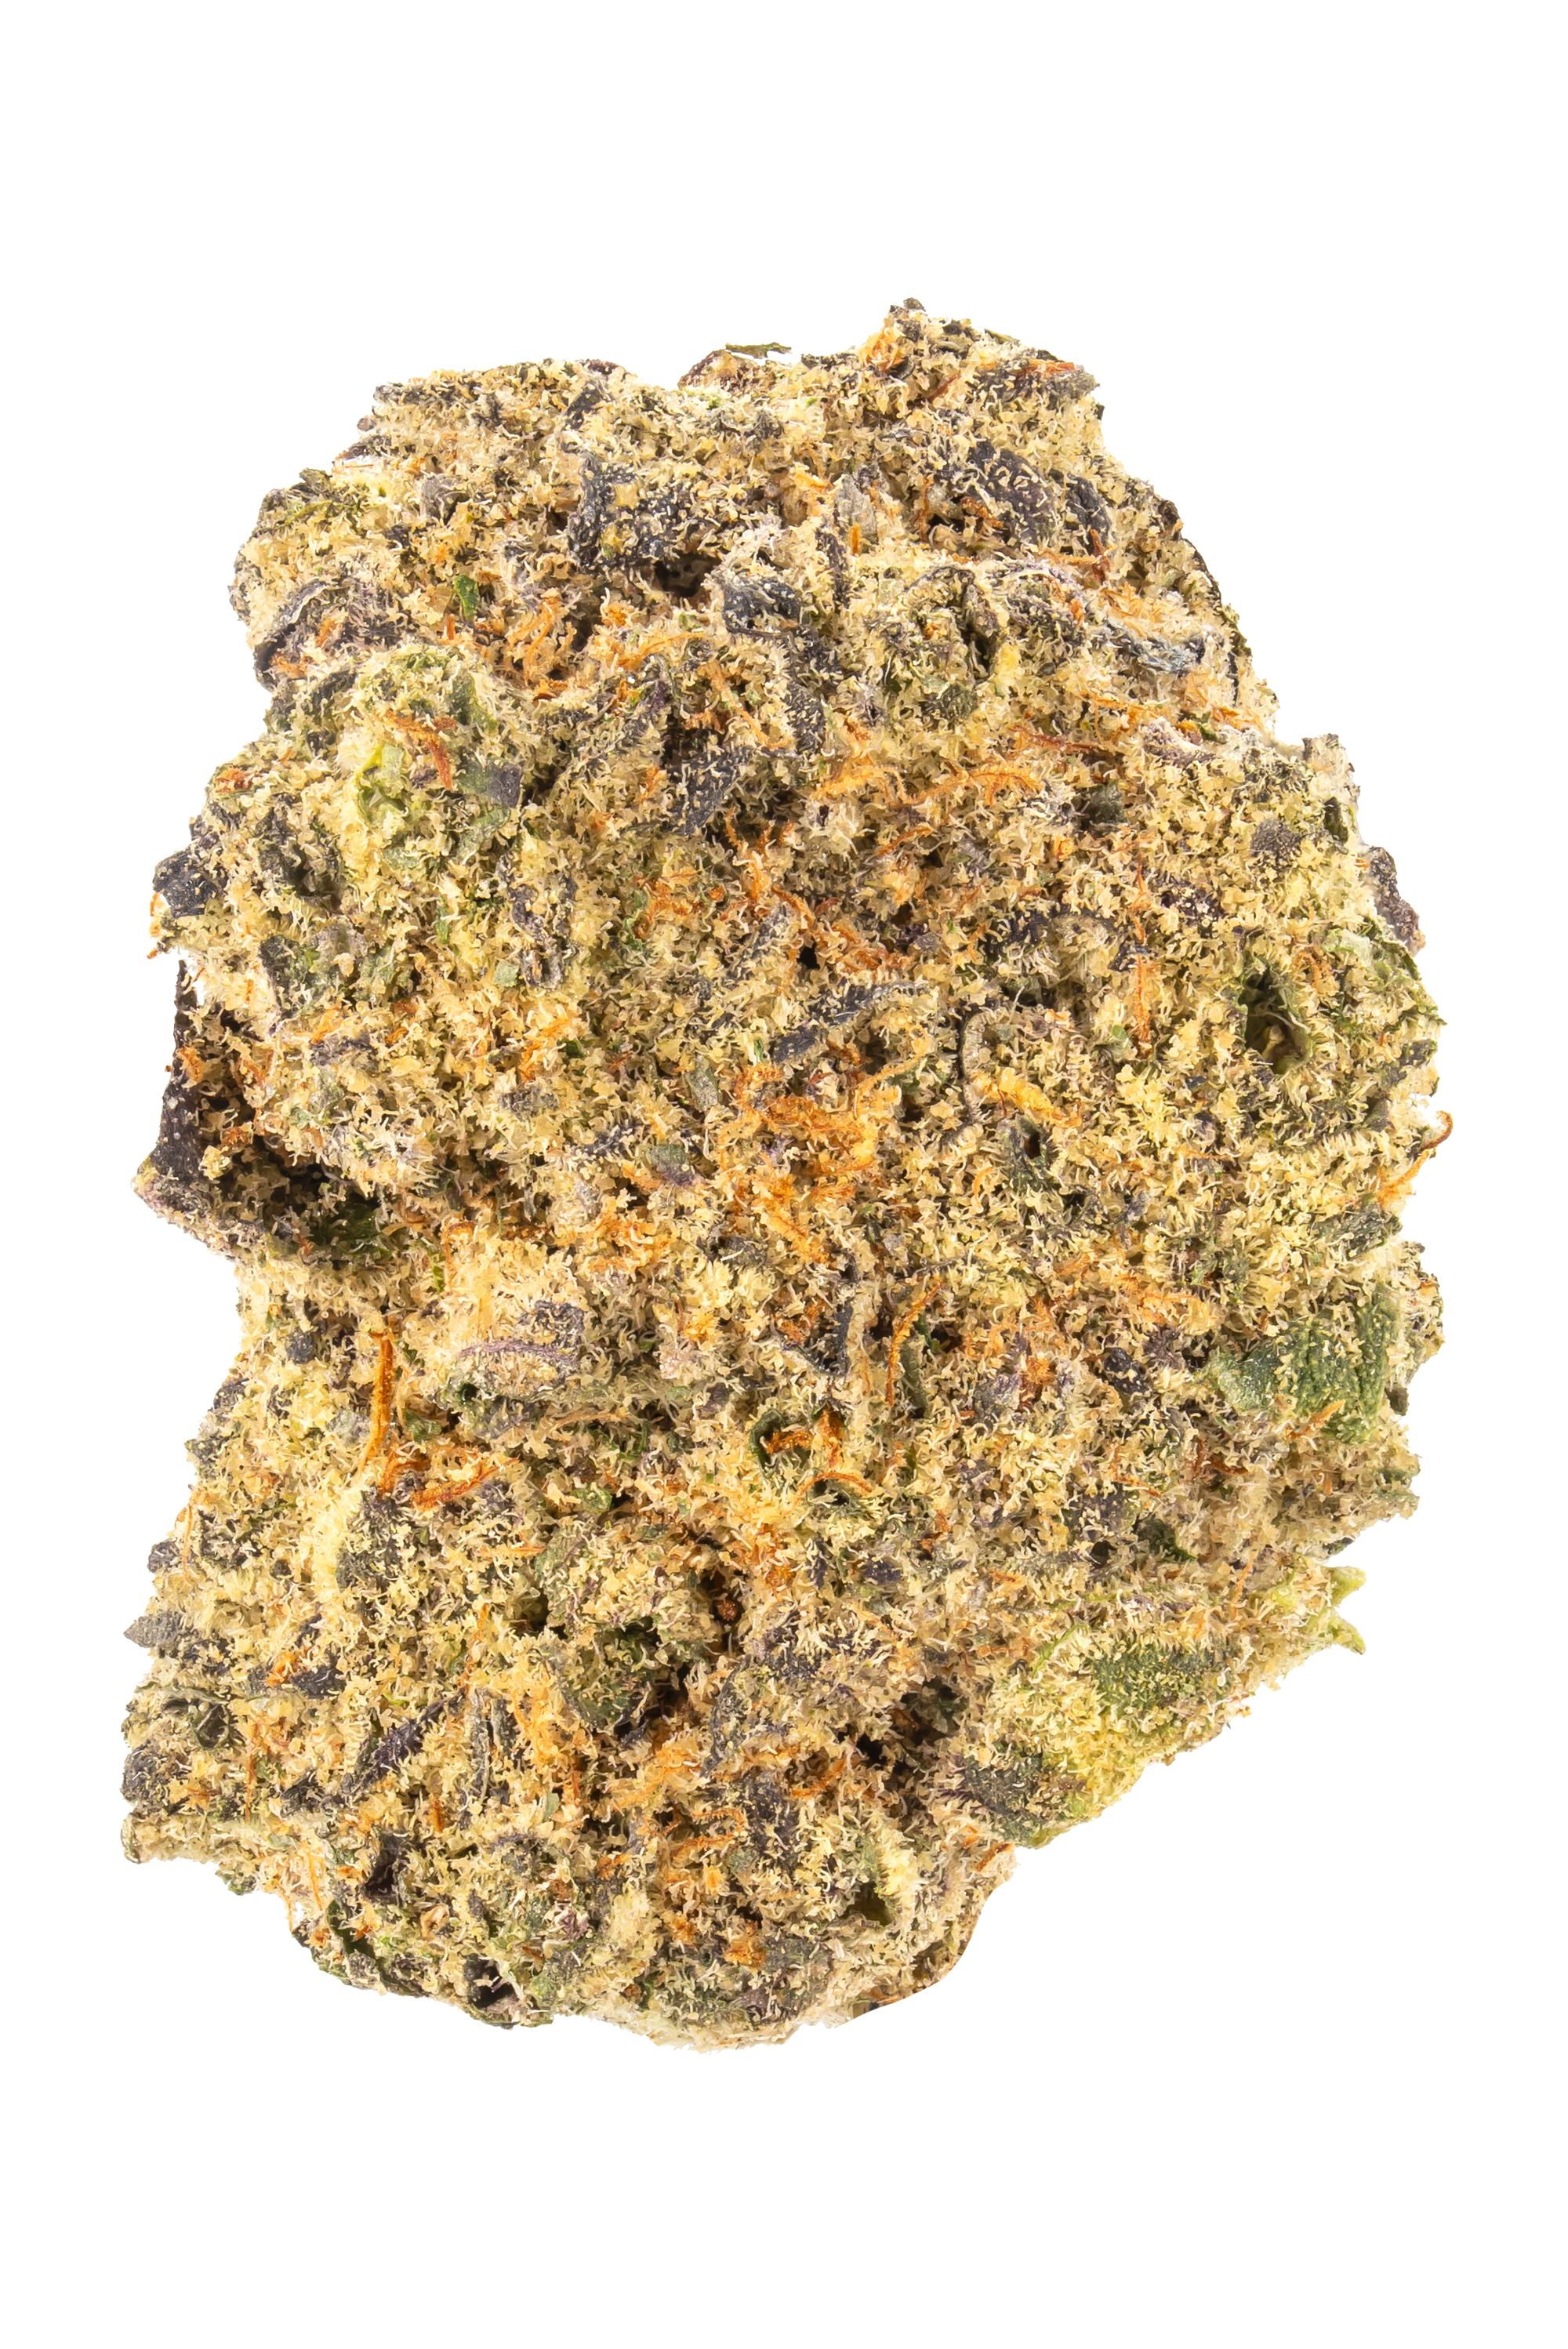 LGMO - Hybrid Cannabis Strain